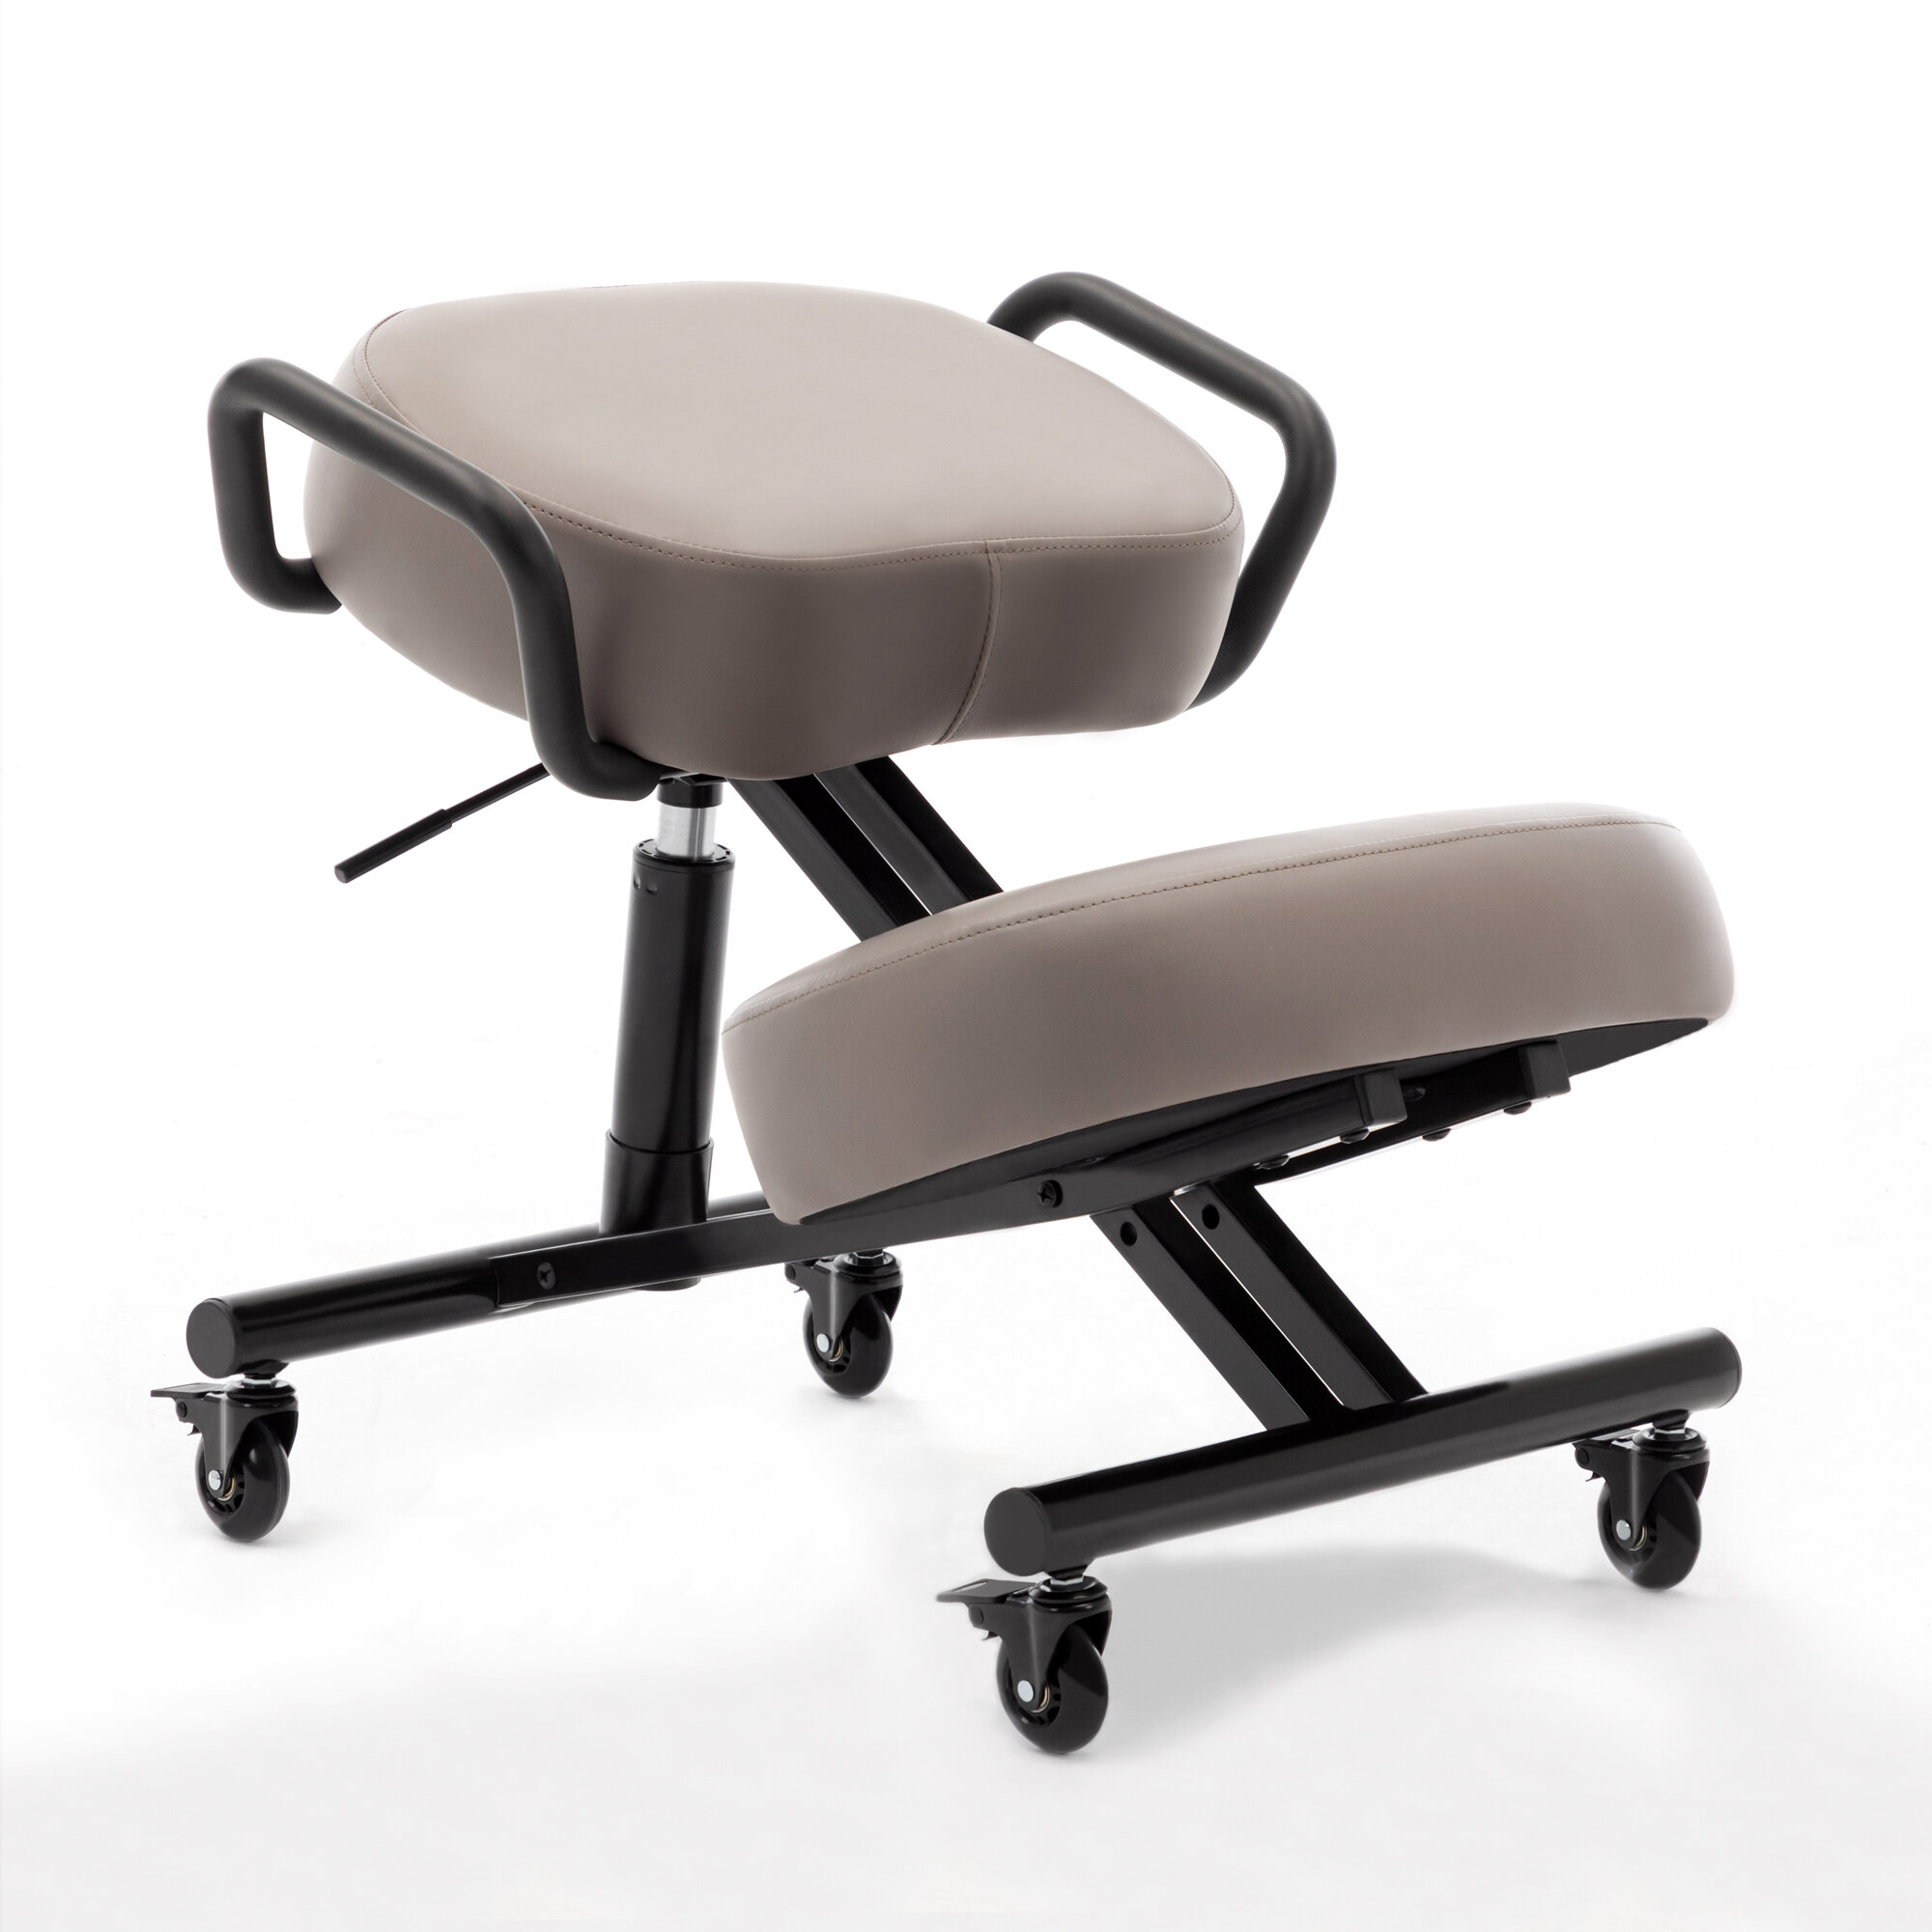 Ergonomic Kneeling Chair: Adjustable Stool, Memory Foam Seat - Black